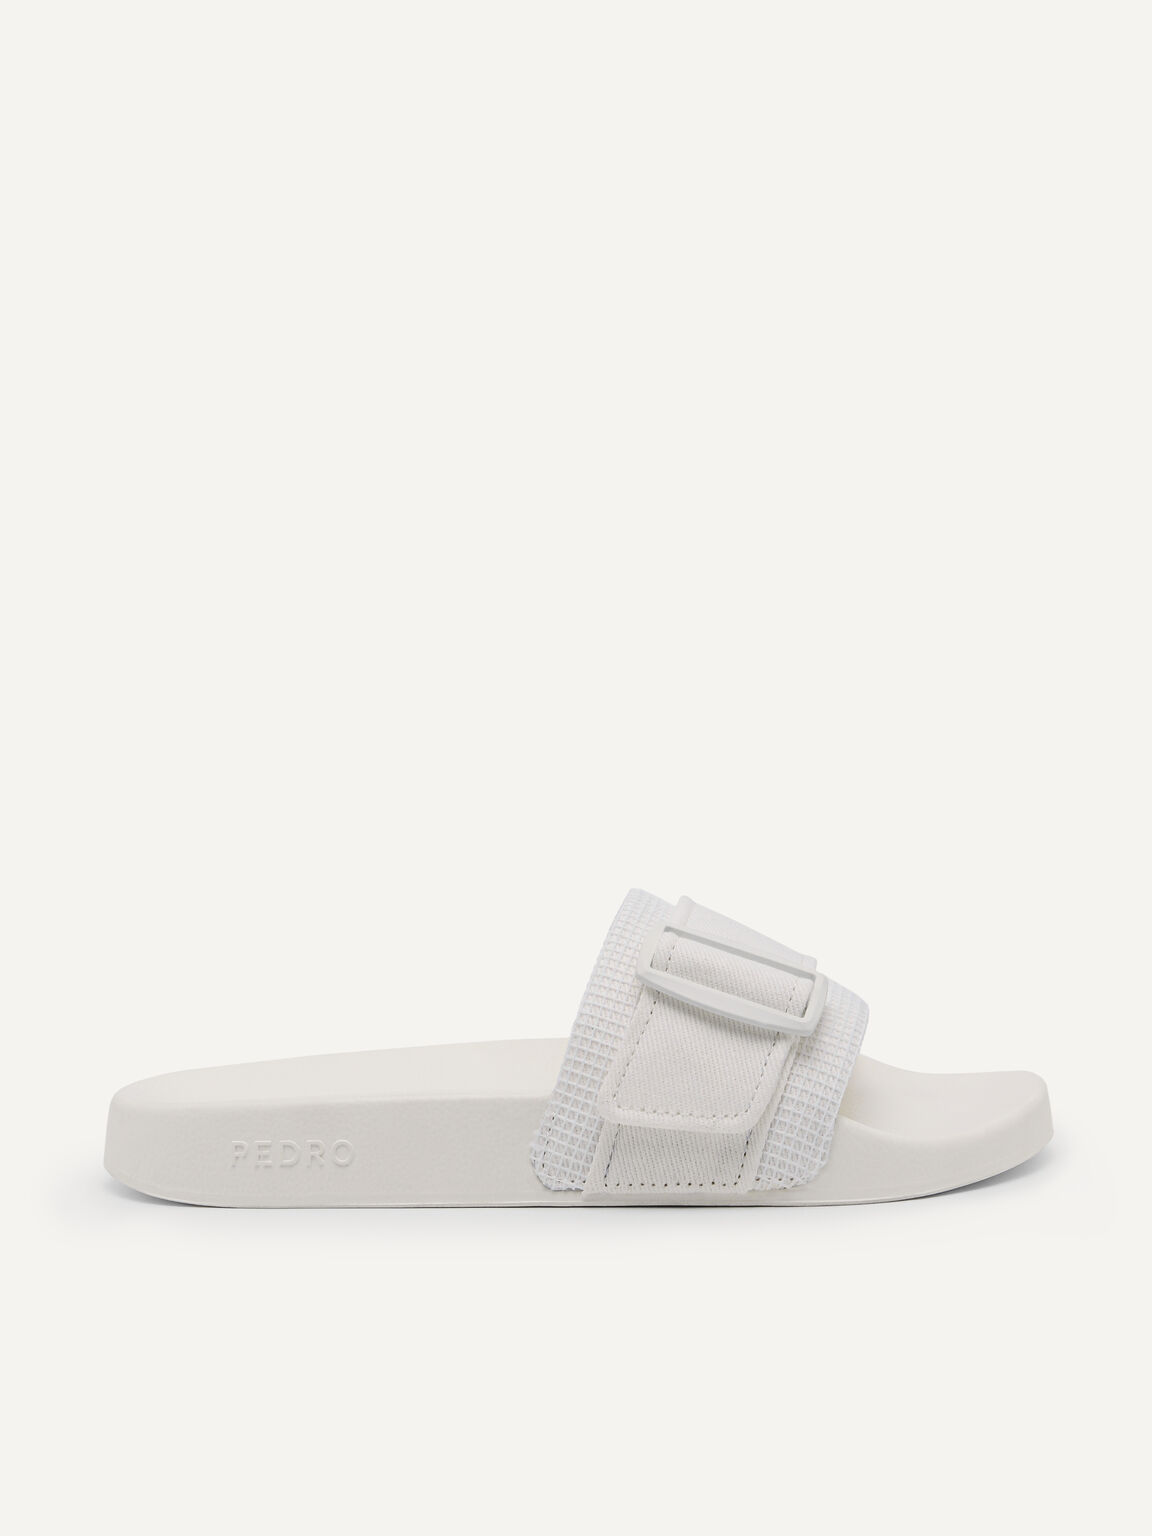 Canvas Slide Sandals, White